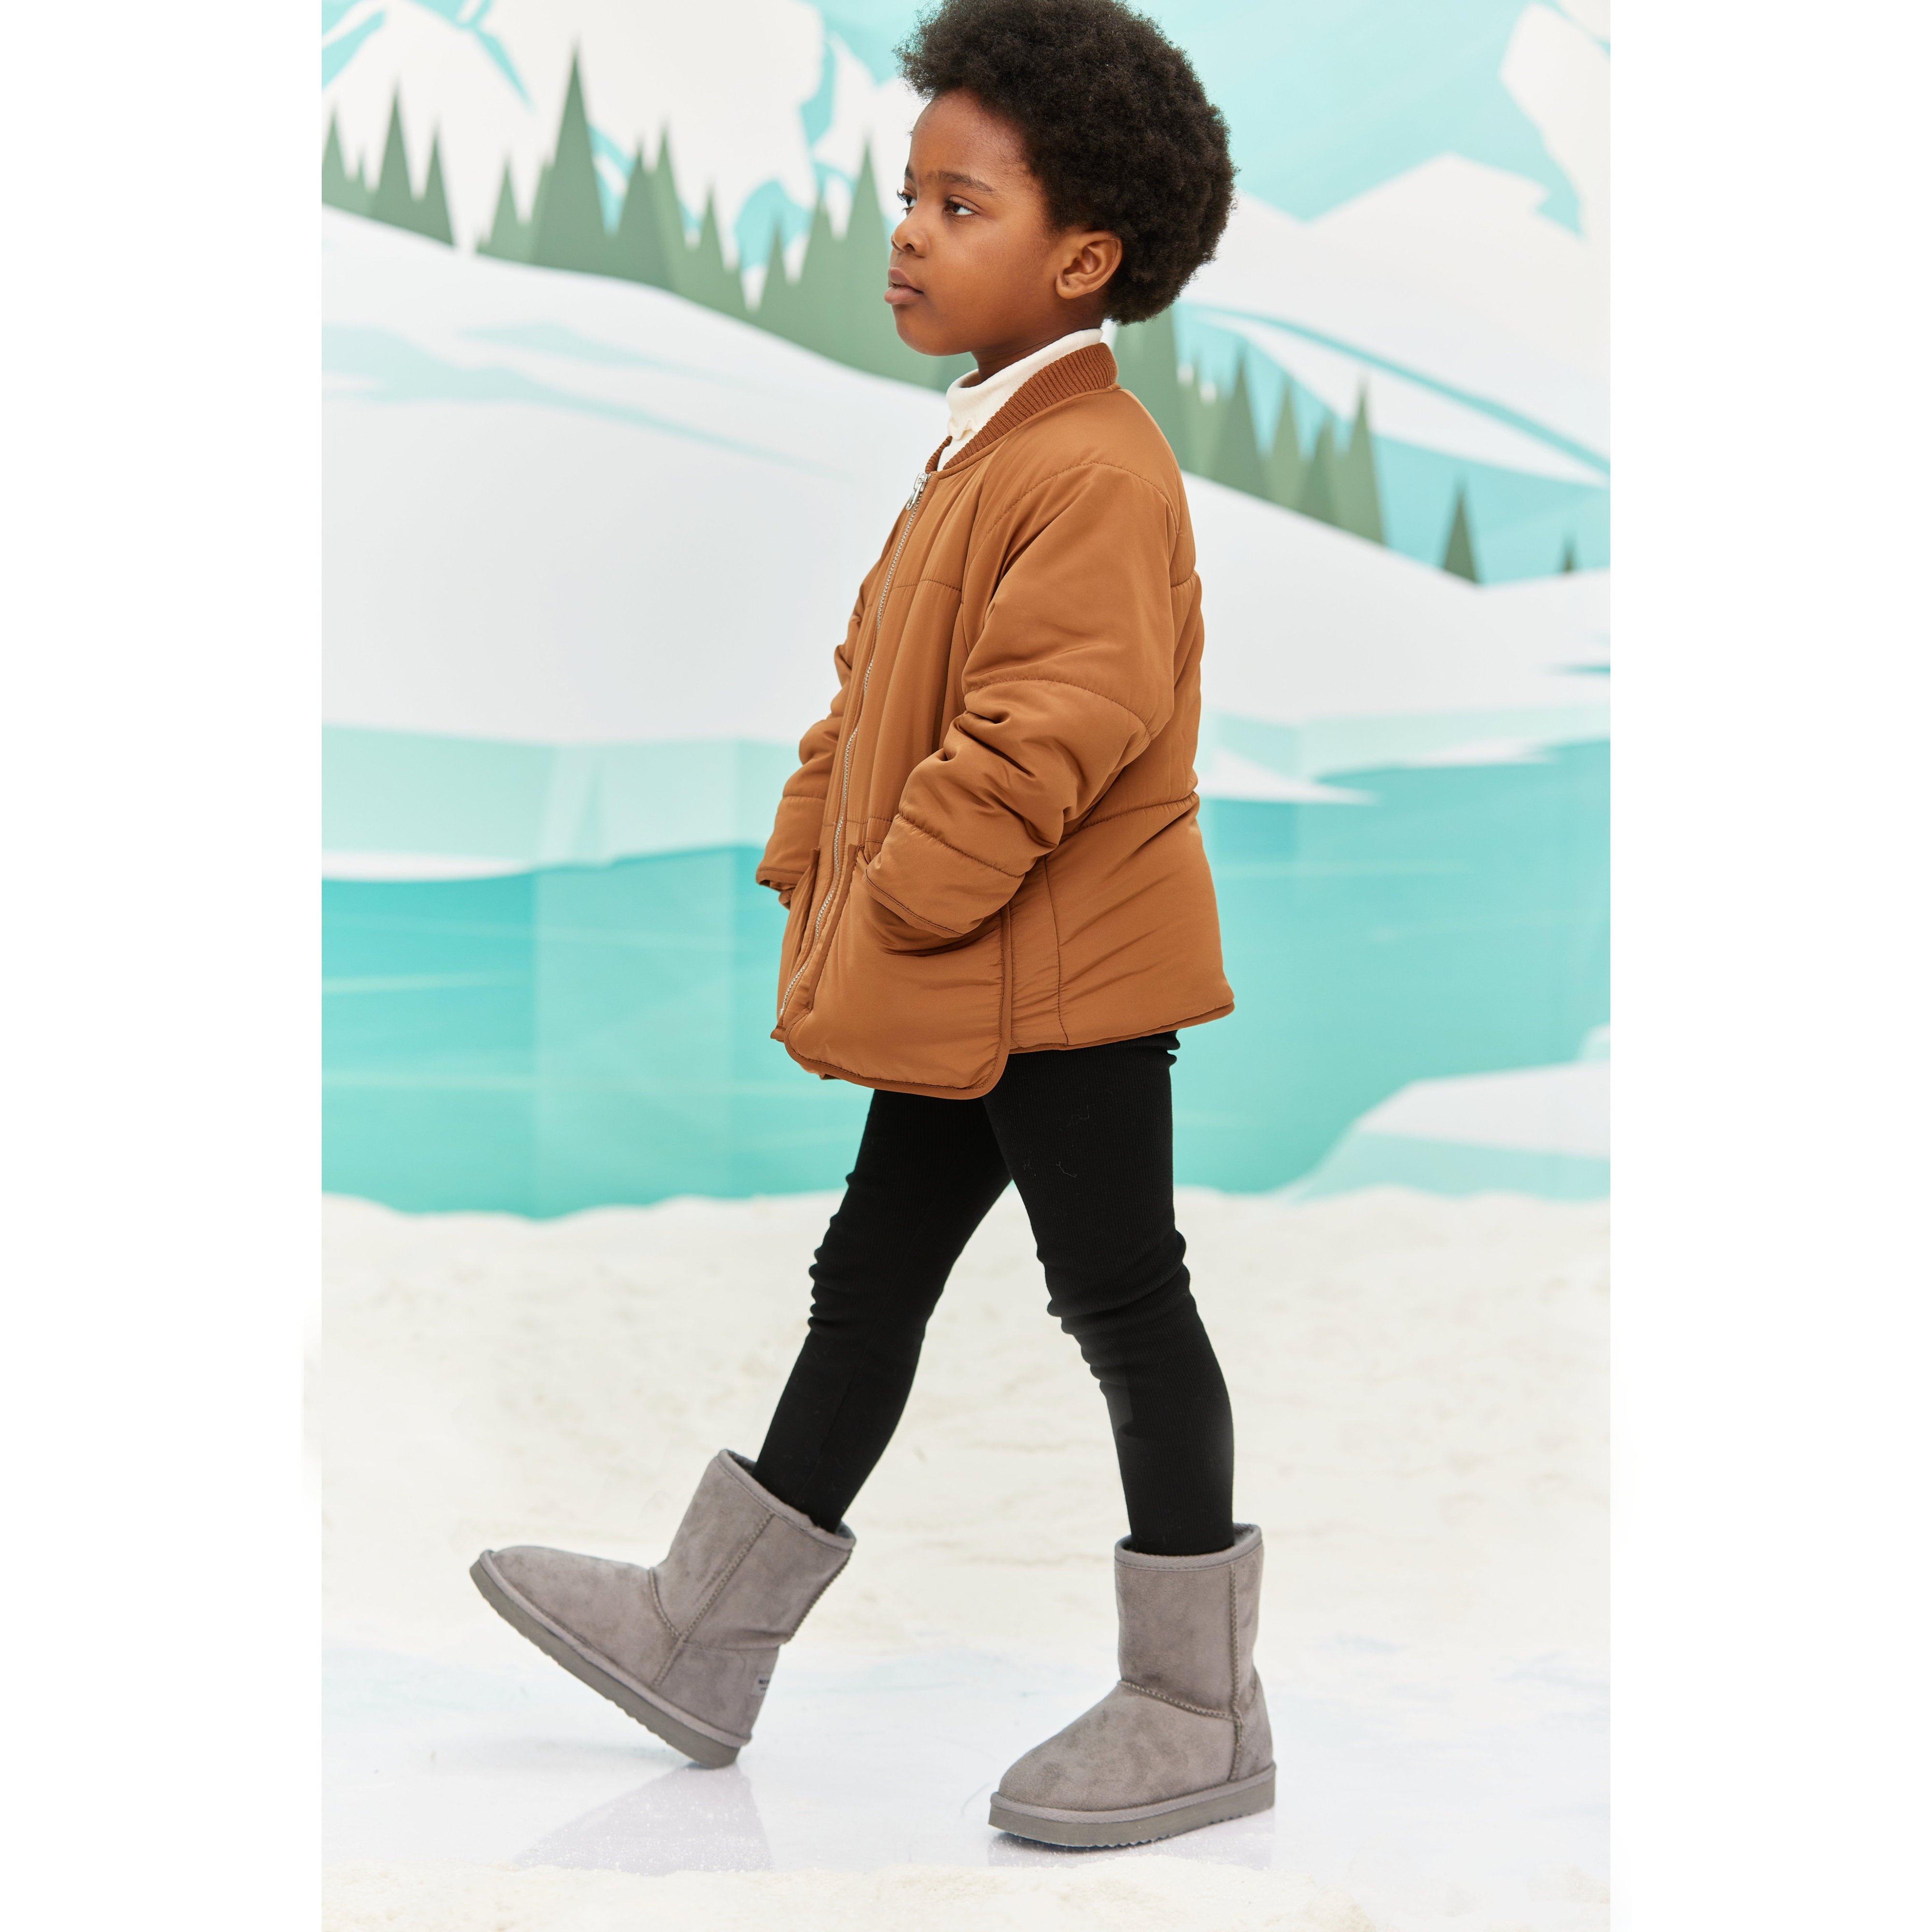 Toddler Little Kid Unisex Classic Winter Essential Warm Snow Boots